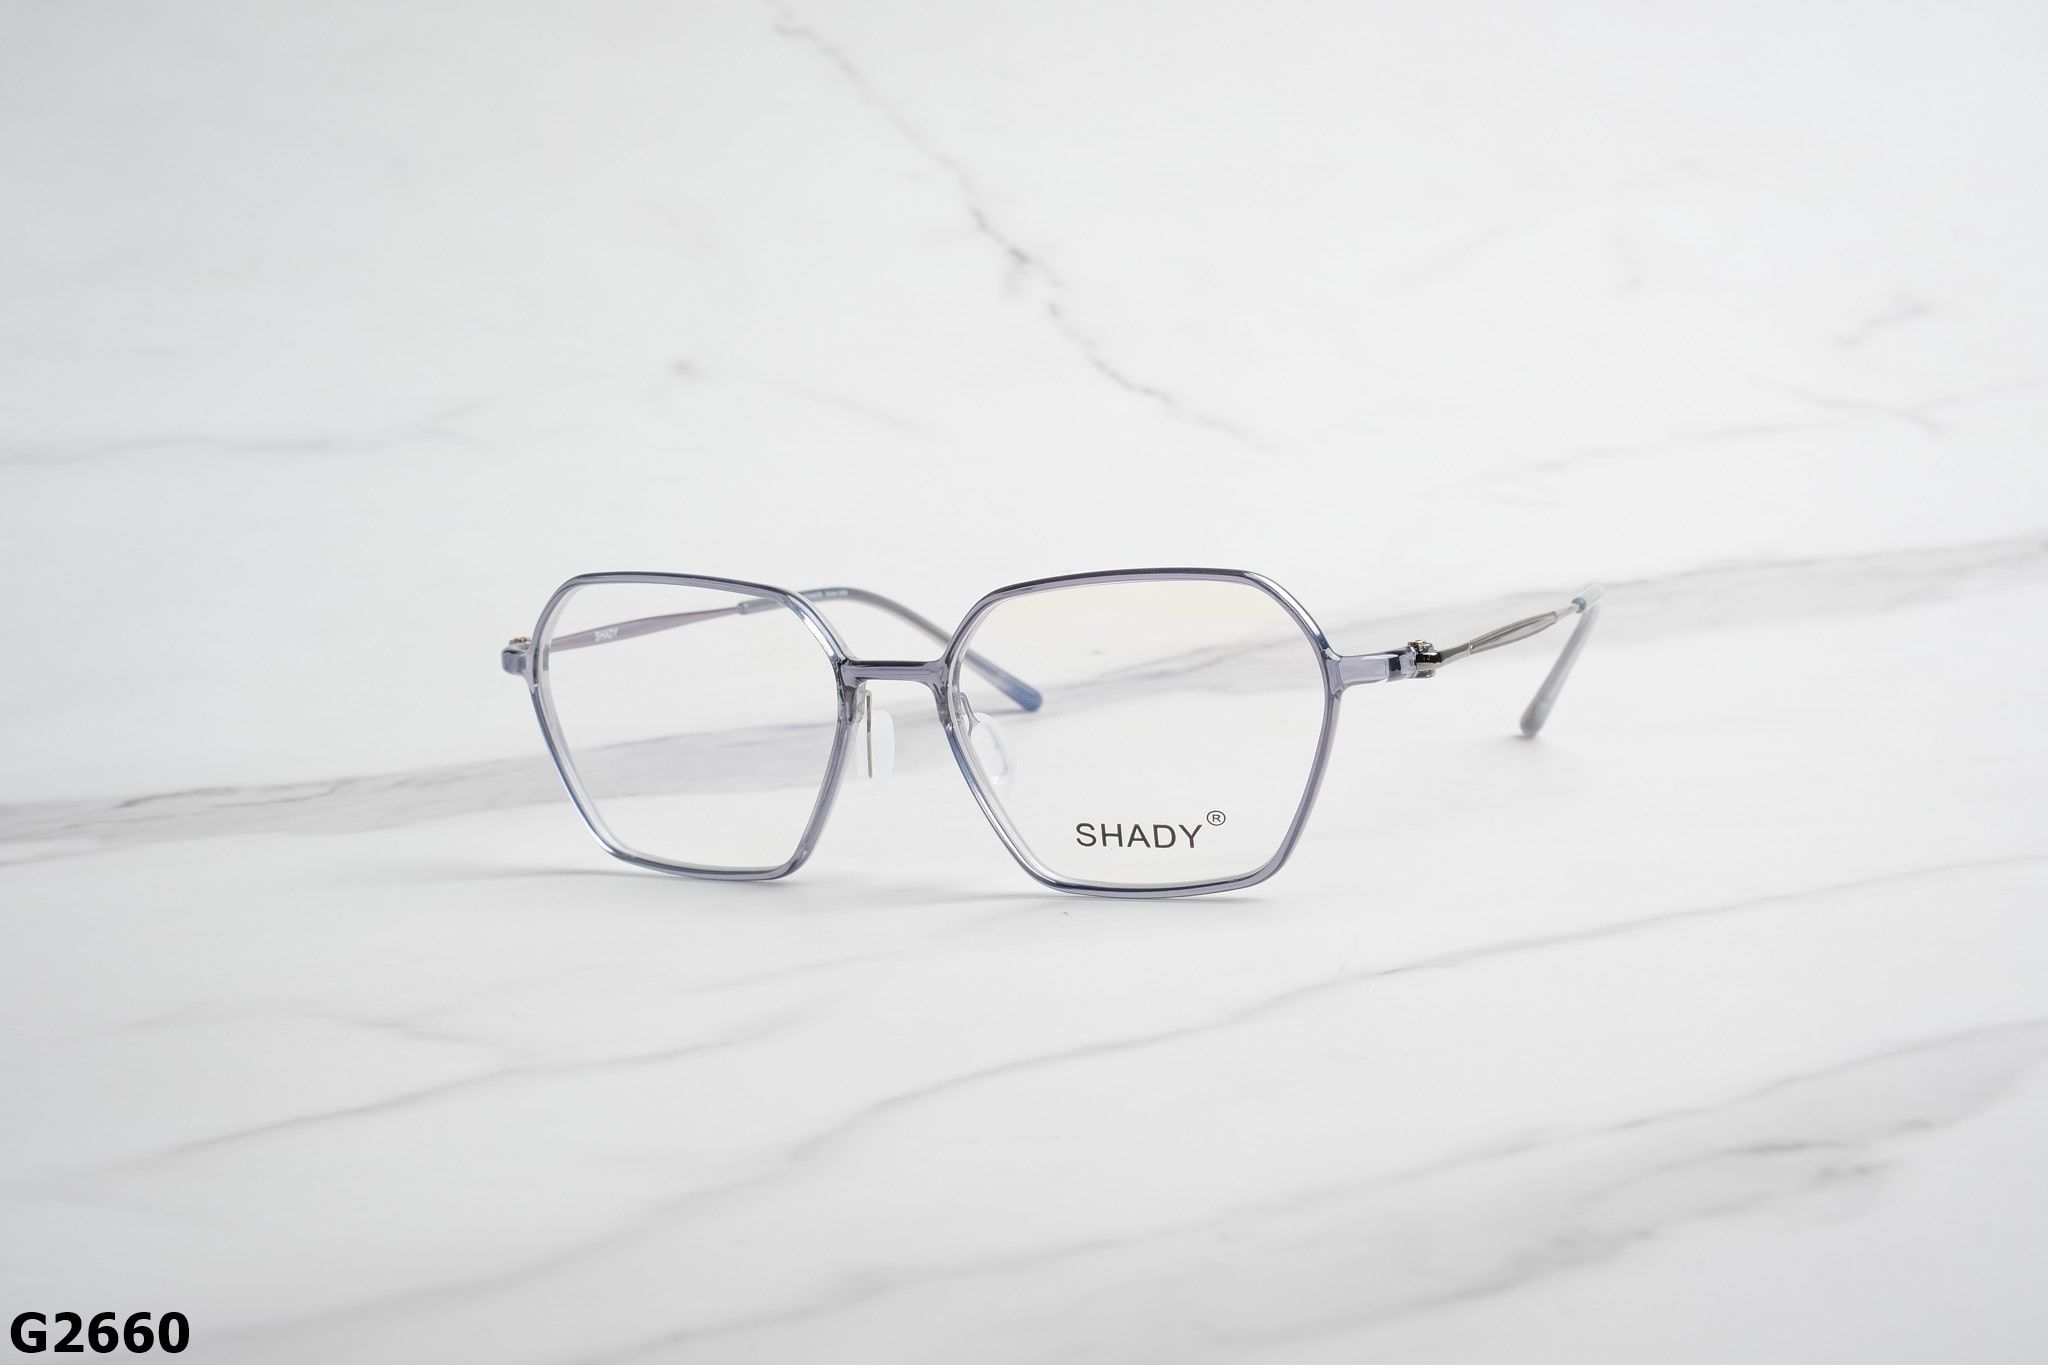  SHADY Eyewear - Glasses - G2660 